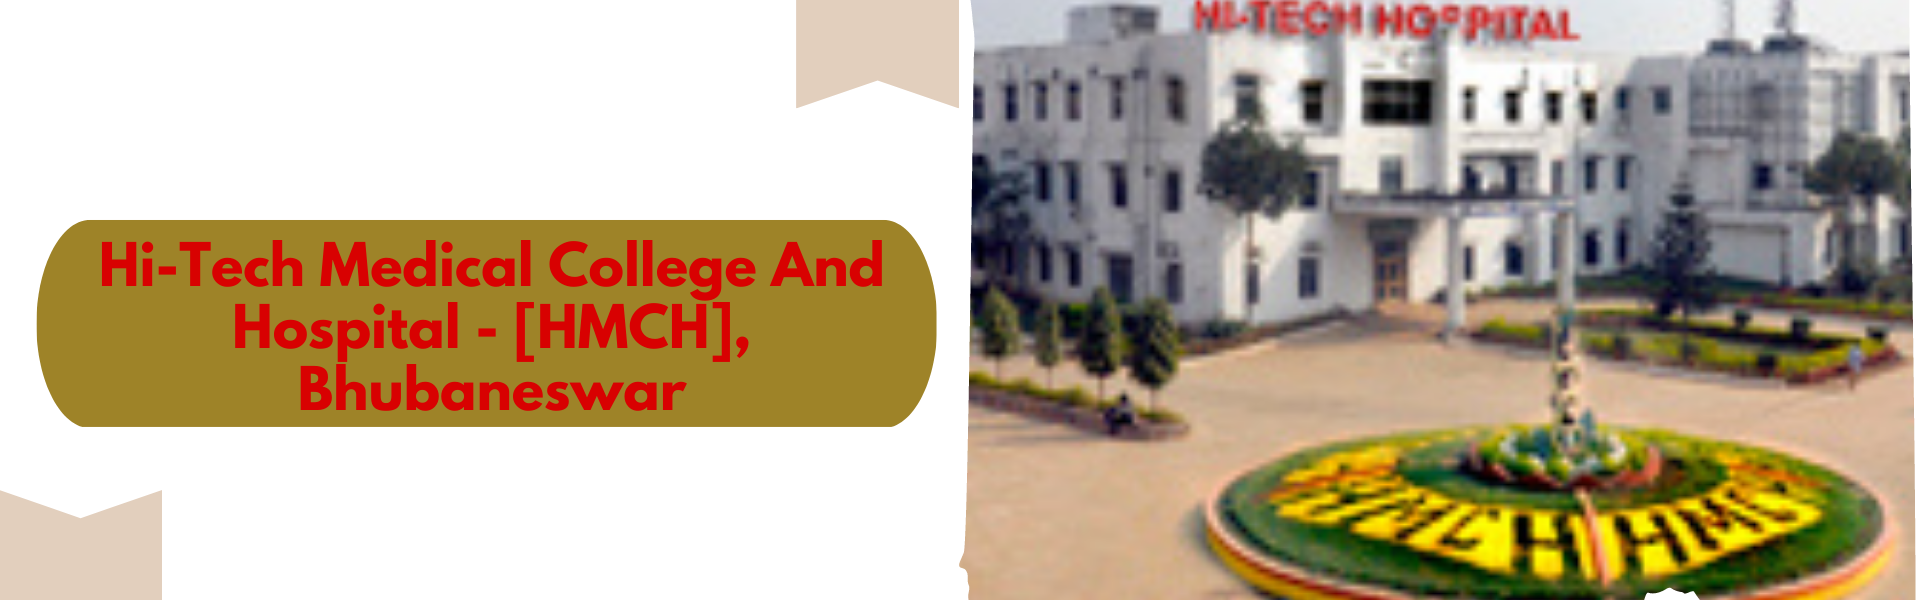 Hi-Tech Medical College And Hospital - [HMCH], Bhubaneswar